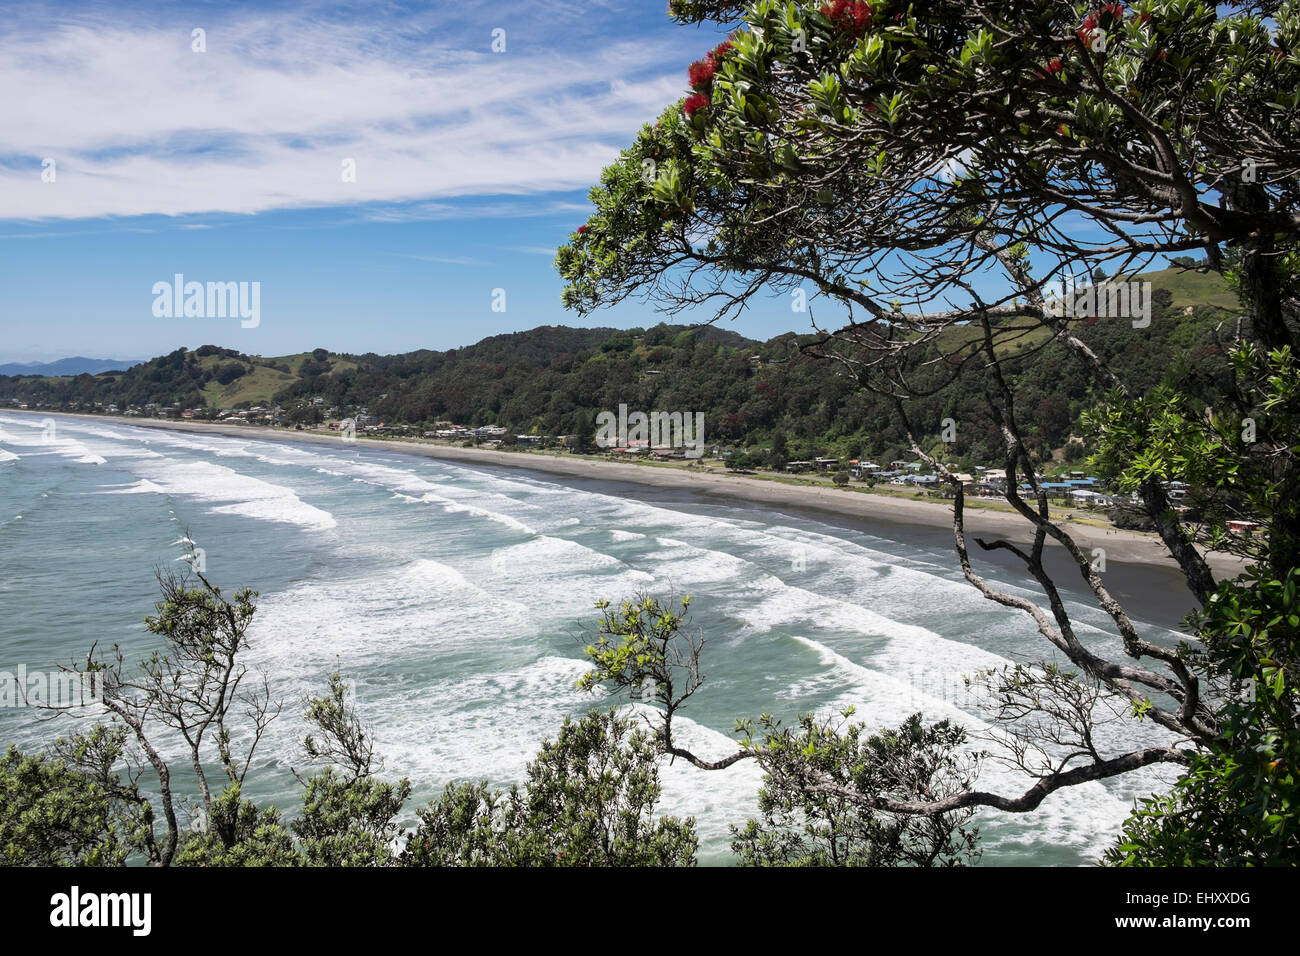 Overlooking the beach and coastline at Whakatane in New Zealand. Stock Photo